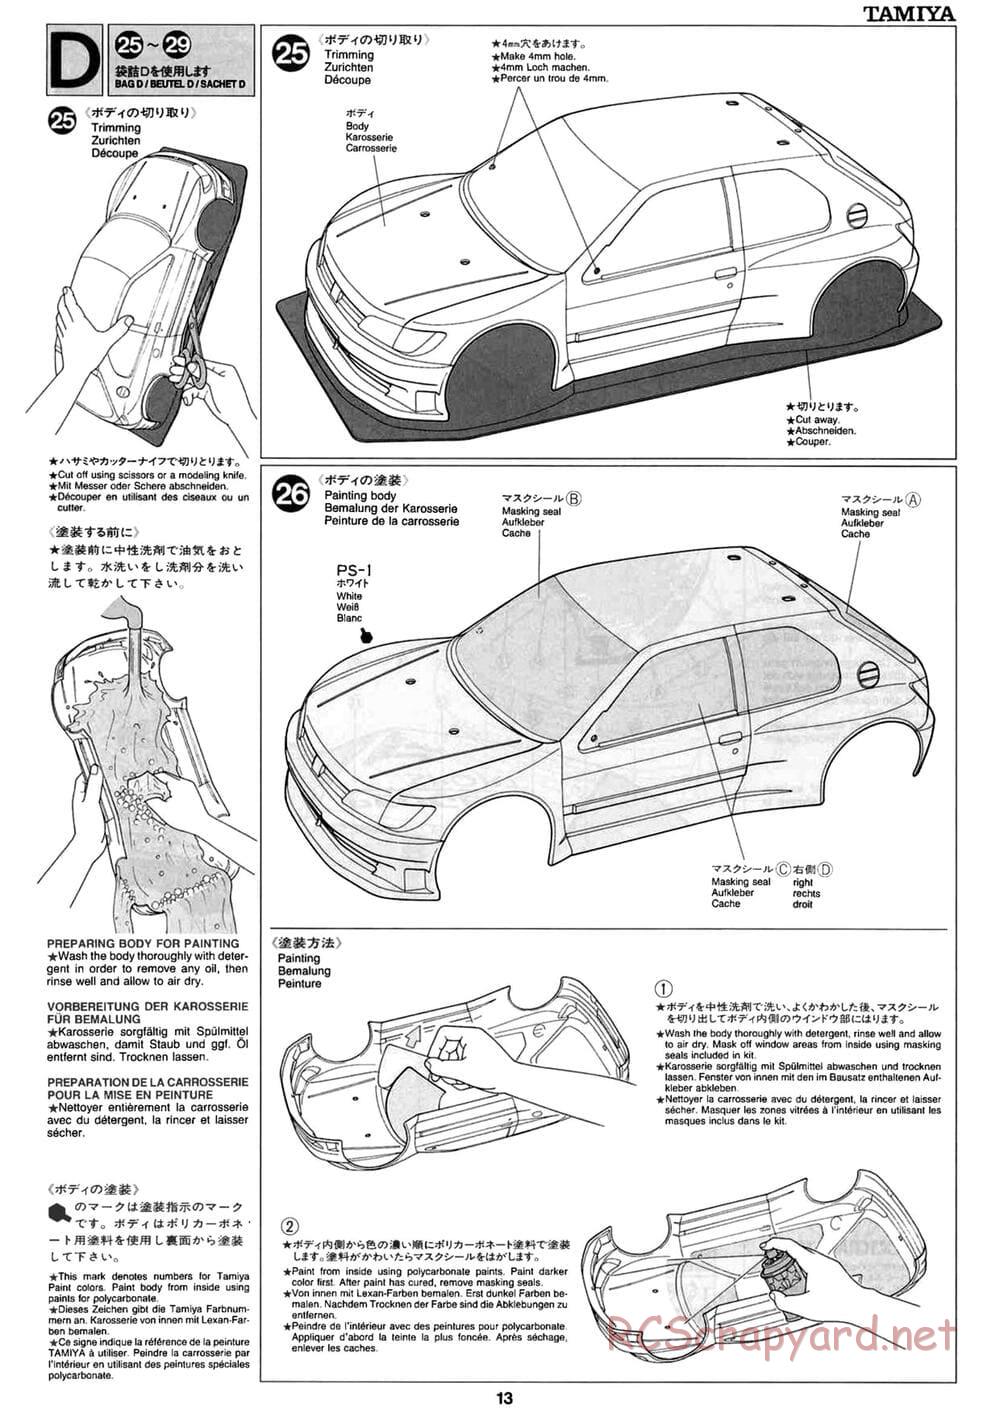 Tamiya - Peugeot 306 Maxi WRC - FF-02 Chassis - Manual - Page 13